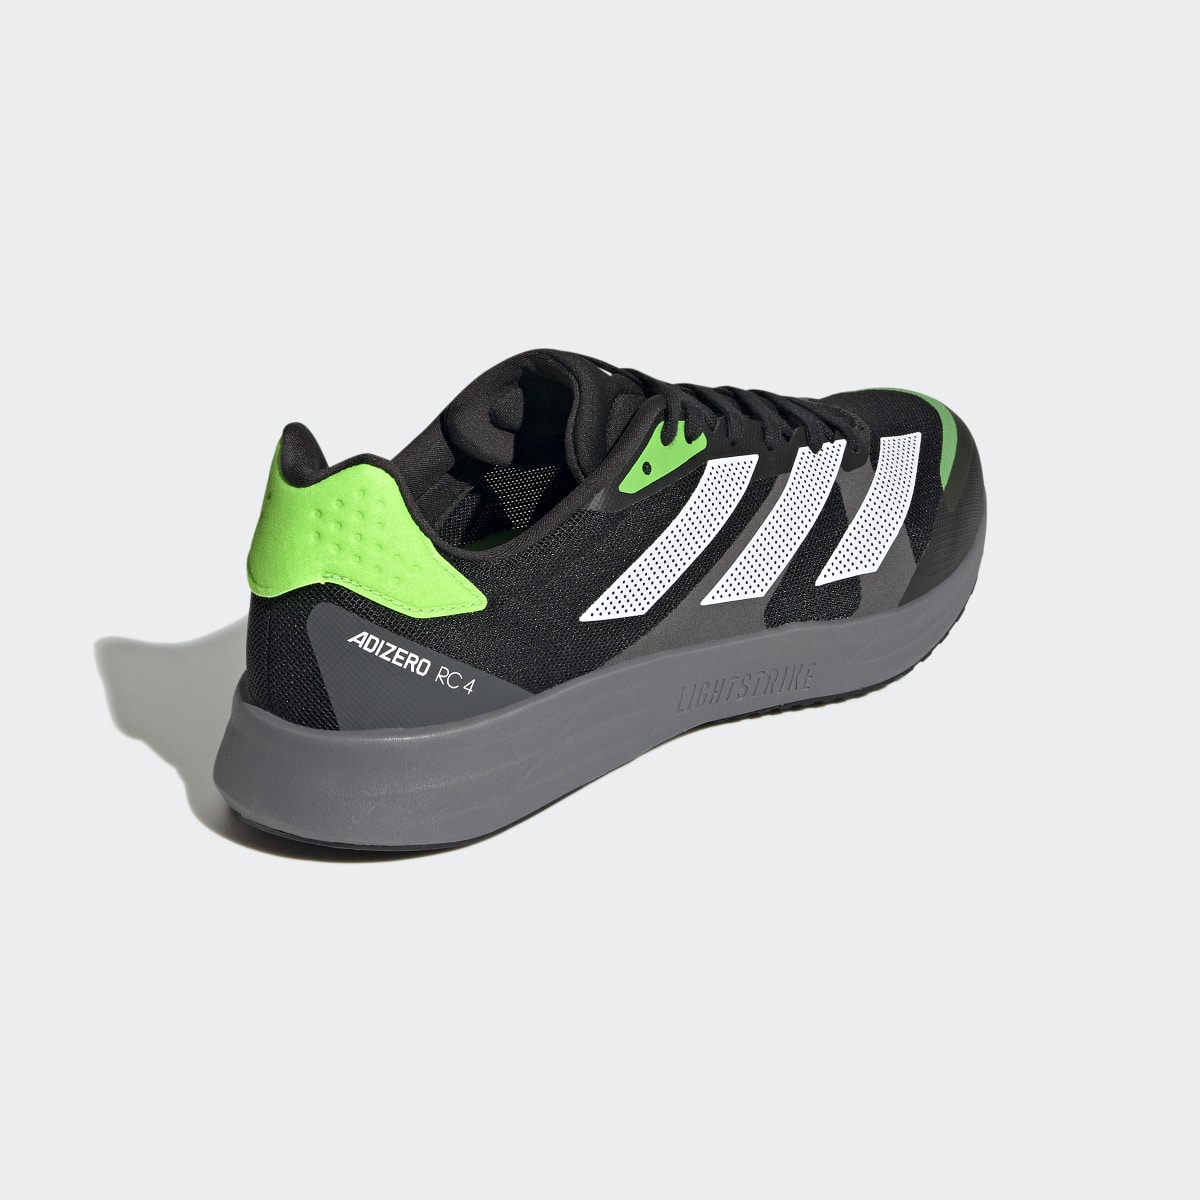 Adidas Adizero RC 4 Ayakkabı. 6